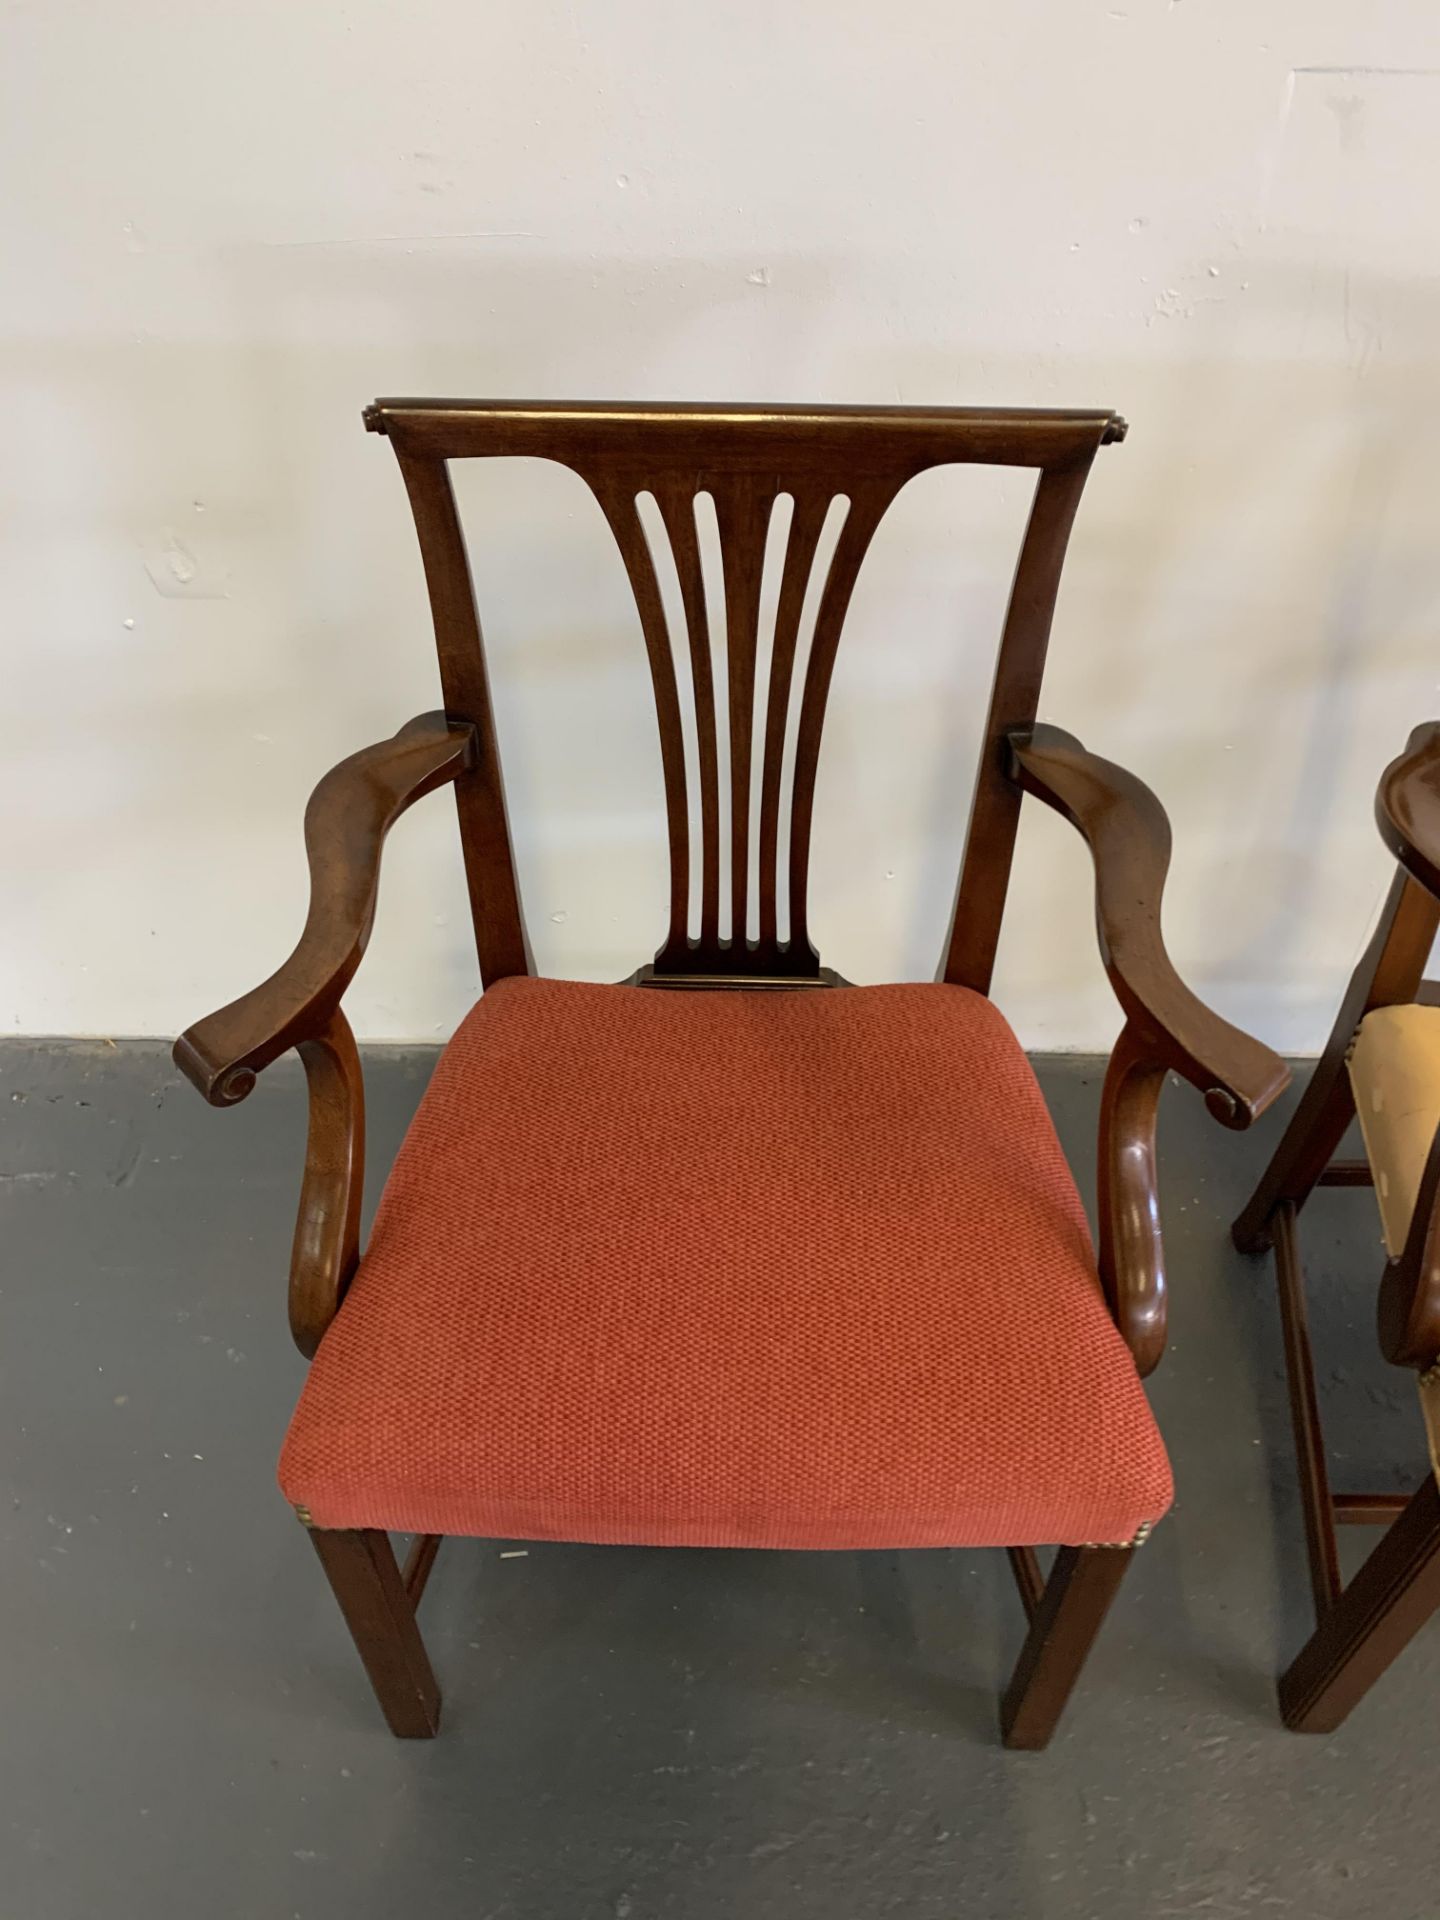 Arthur Brett Mahogany Arm Chair